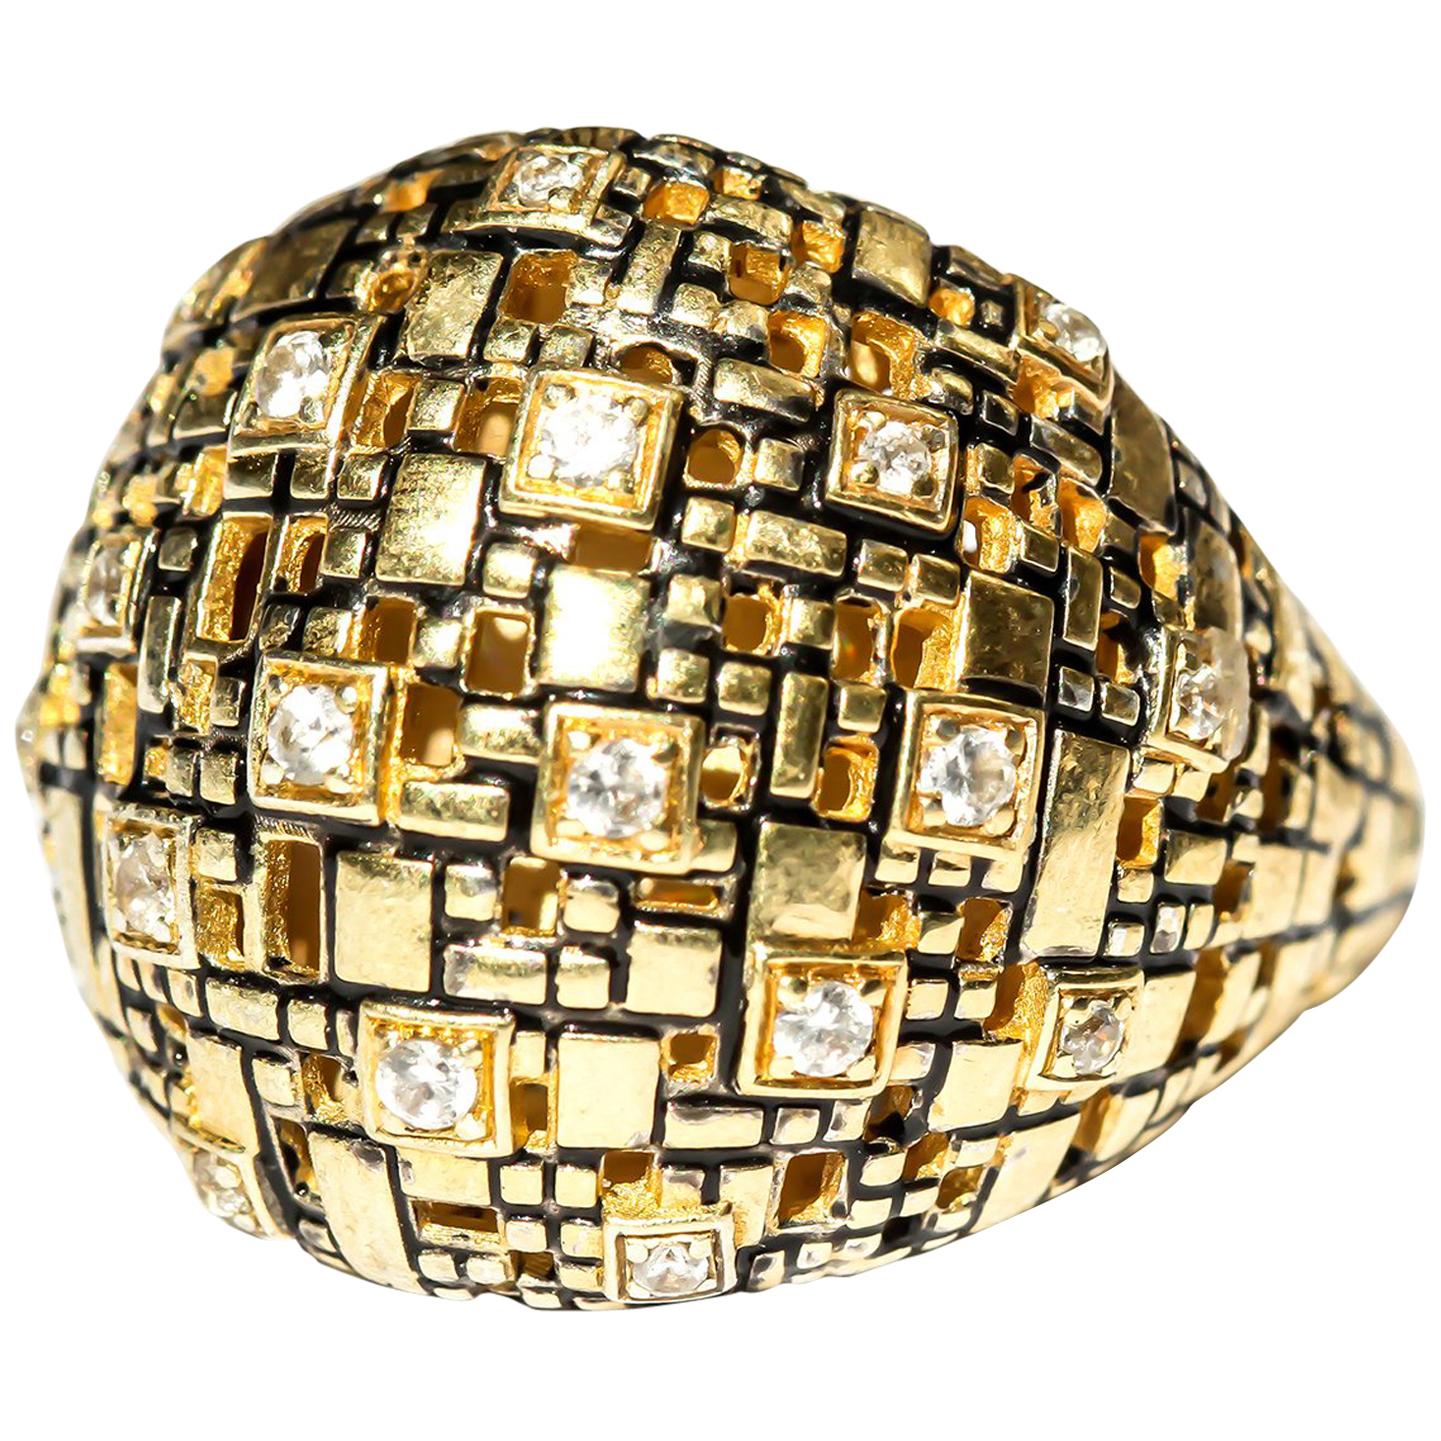 Bitcoin Blockchain Dome 18K Gold and Diamond Ring